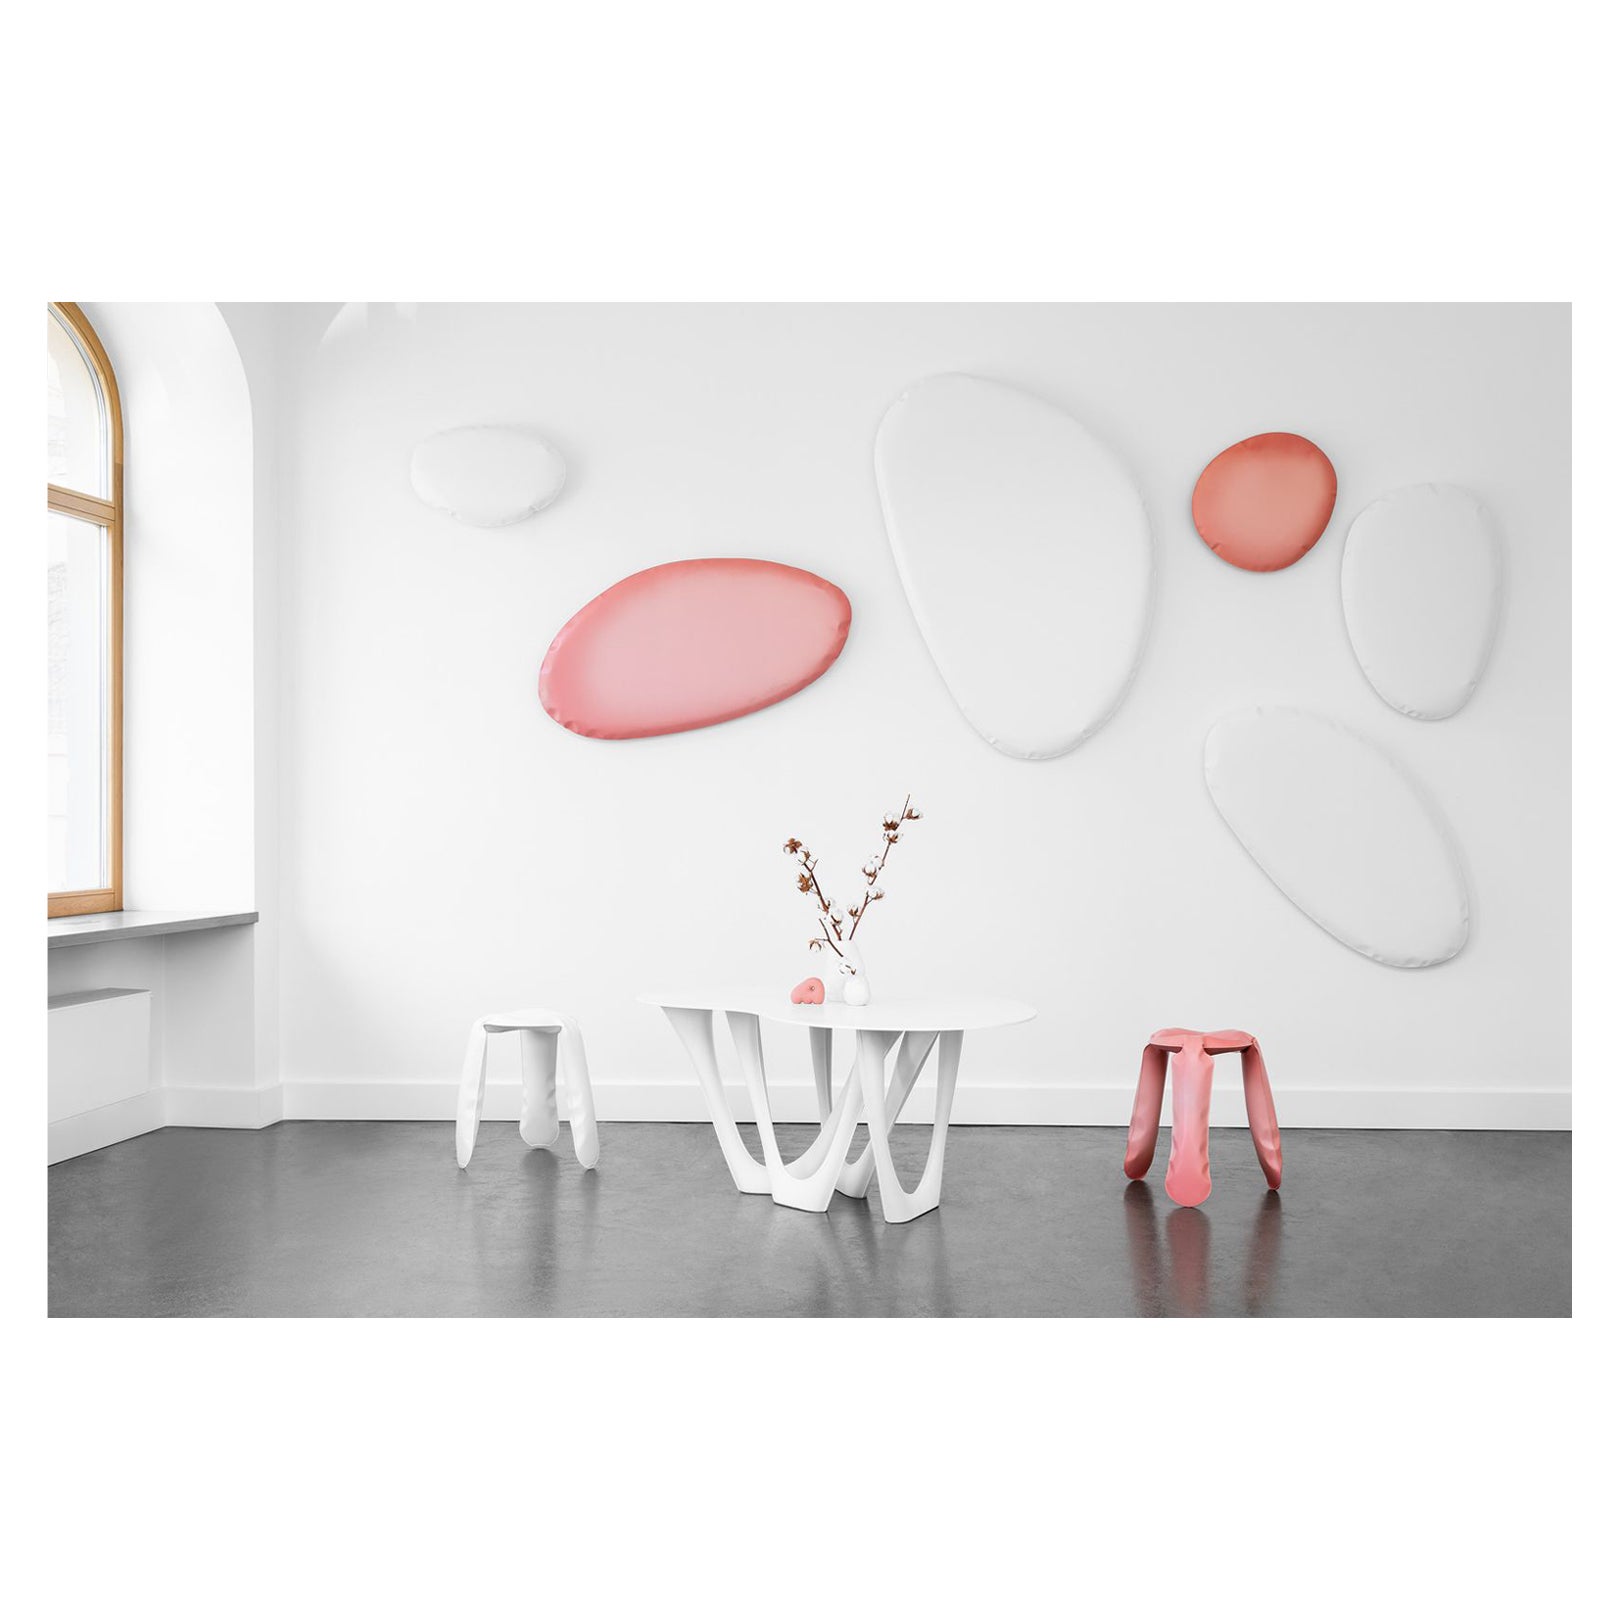 Miroir mural Tafla O4.5 en acier inoxydable poli de couleur blanche mate par Zieta